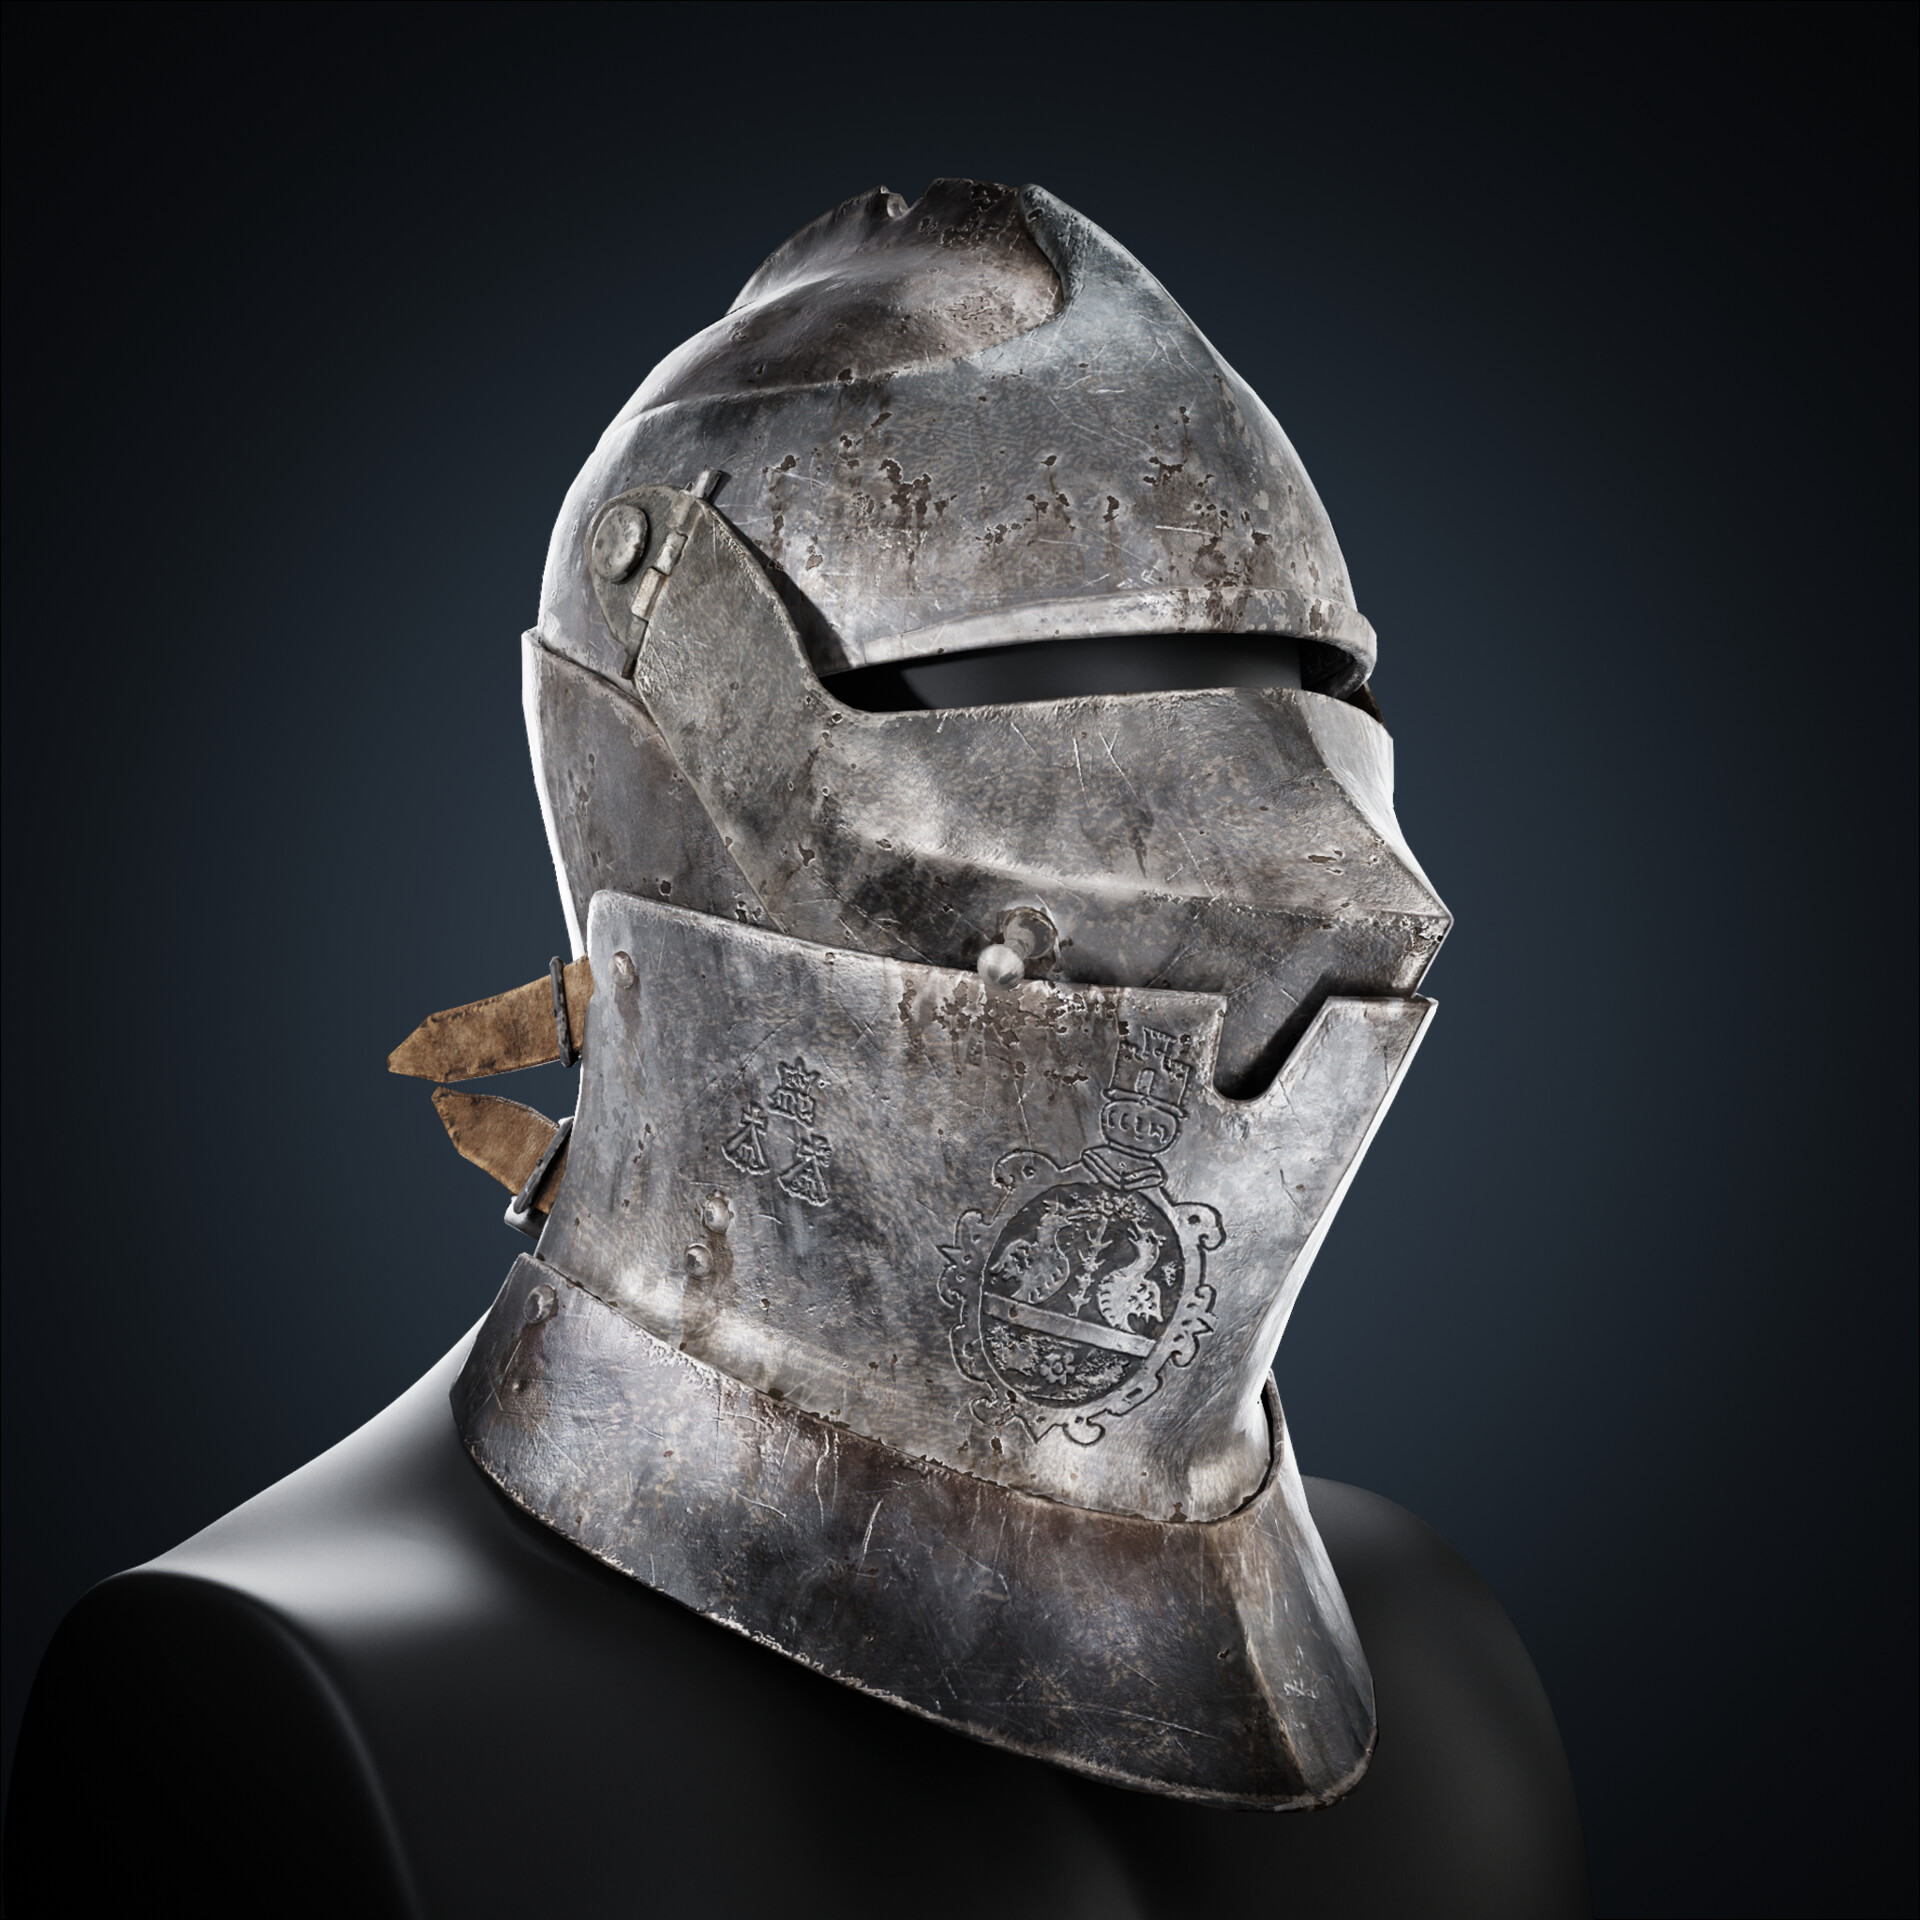 knight helmet open